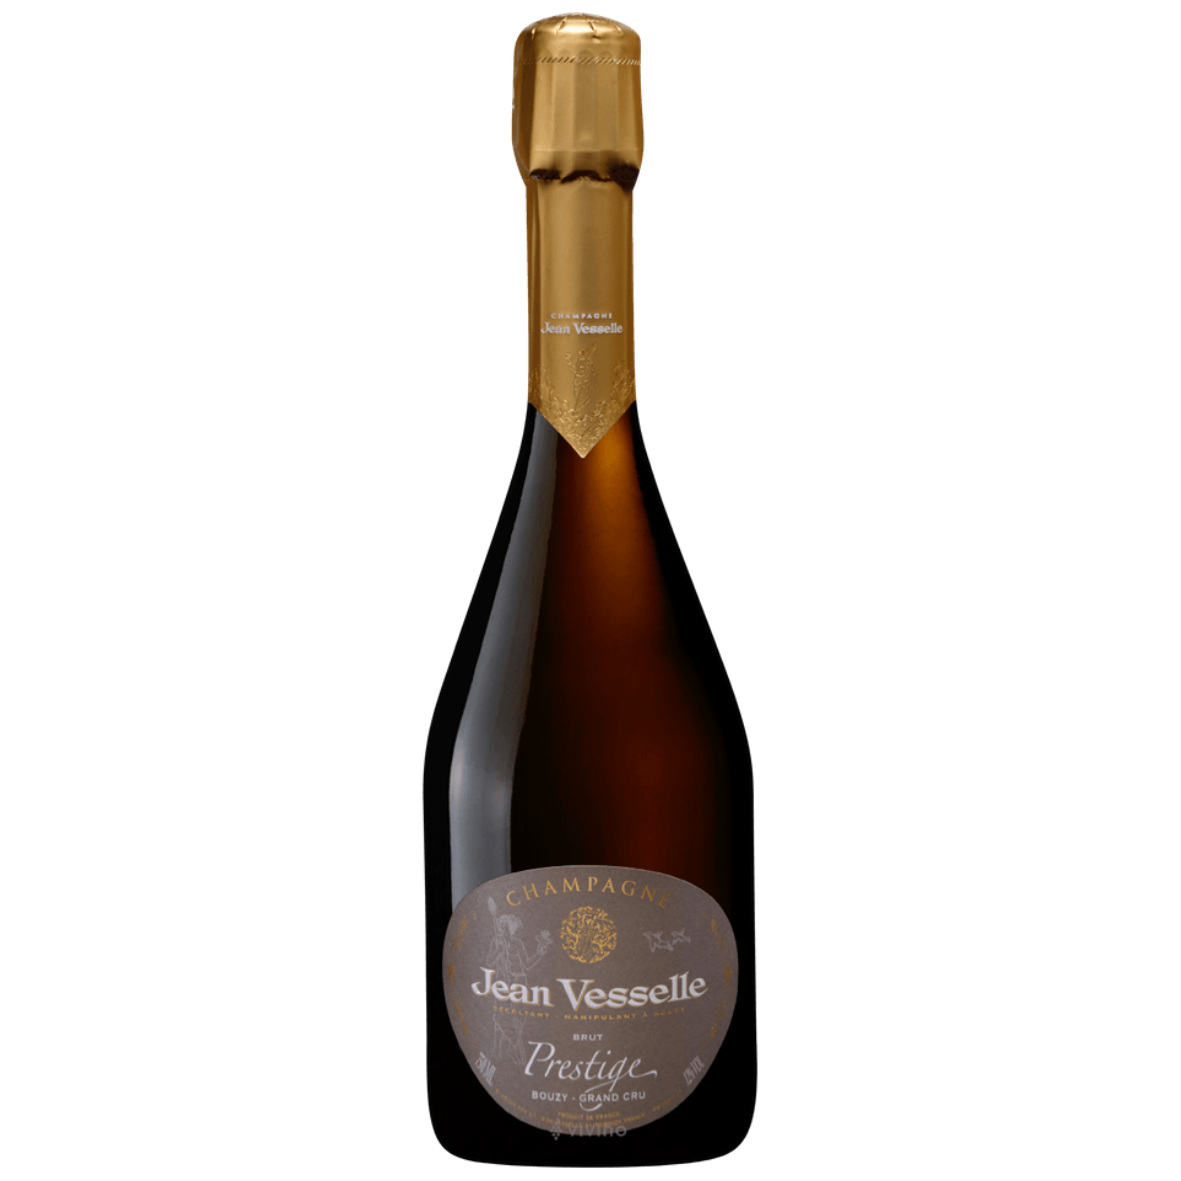 Jean Vesselle, Champagne Bouzy Grand Cru "Prestige' Brut NV